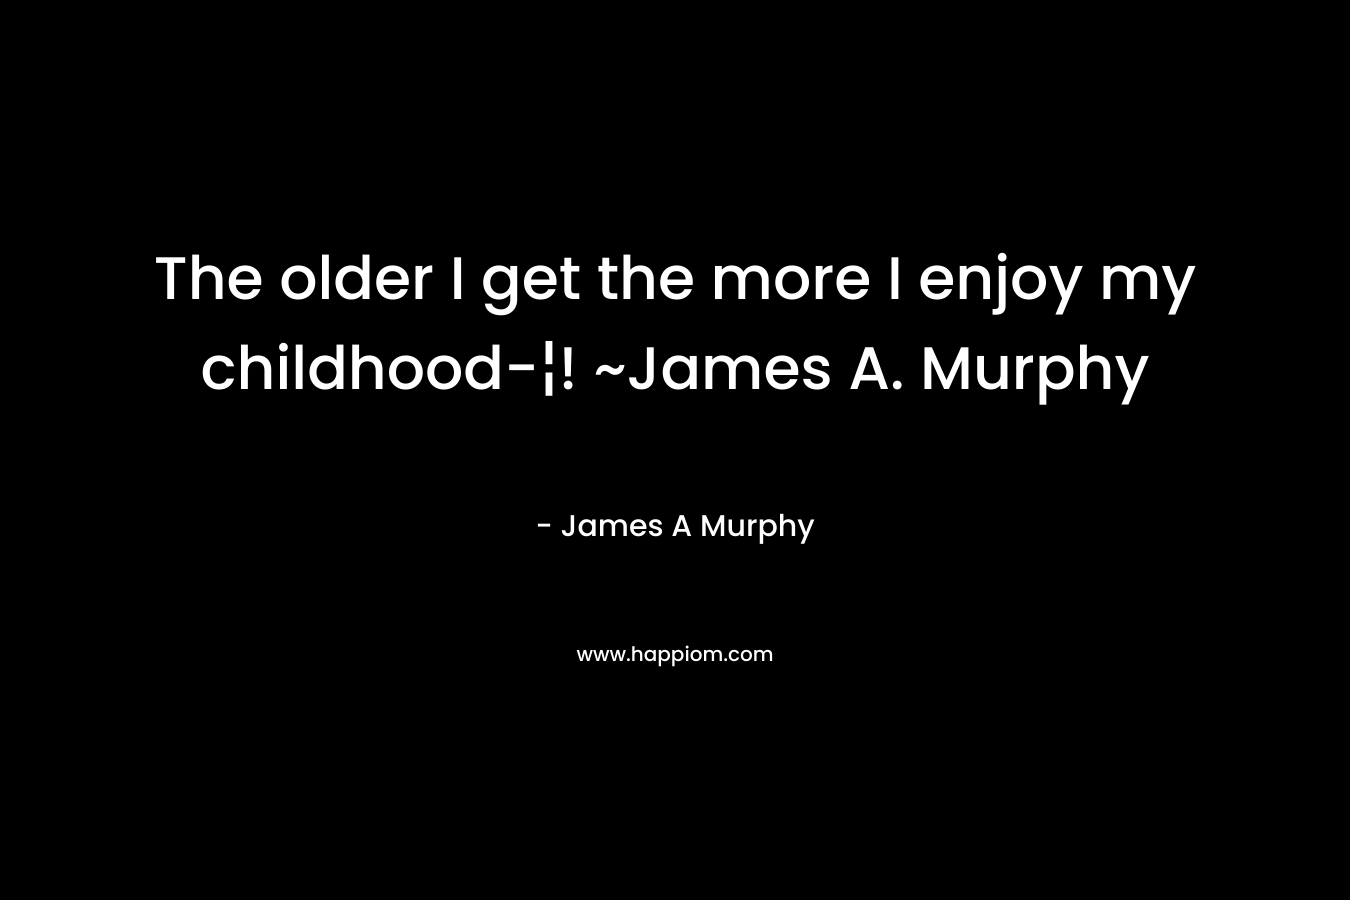 The older I get the more I enjoy my childhood-¦! ~James A. Murphy